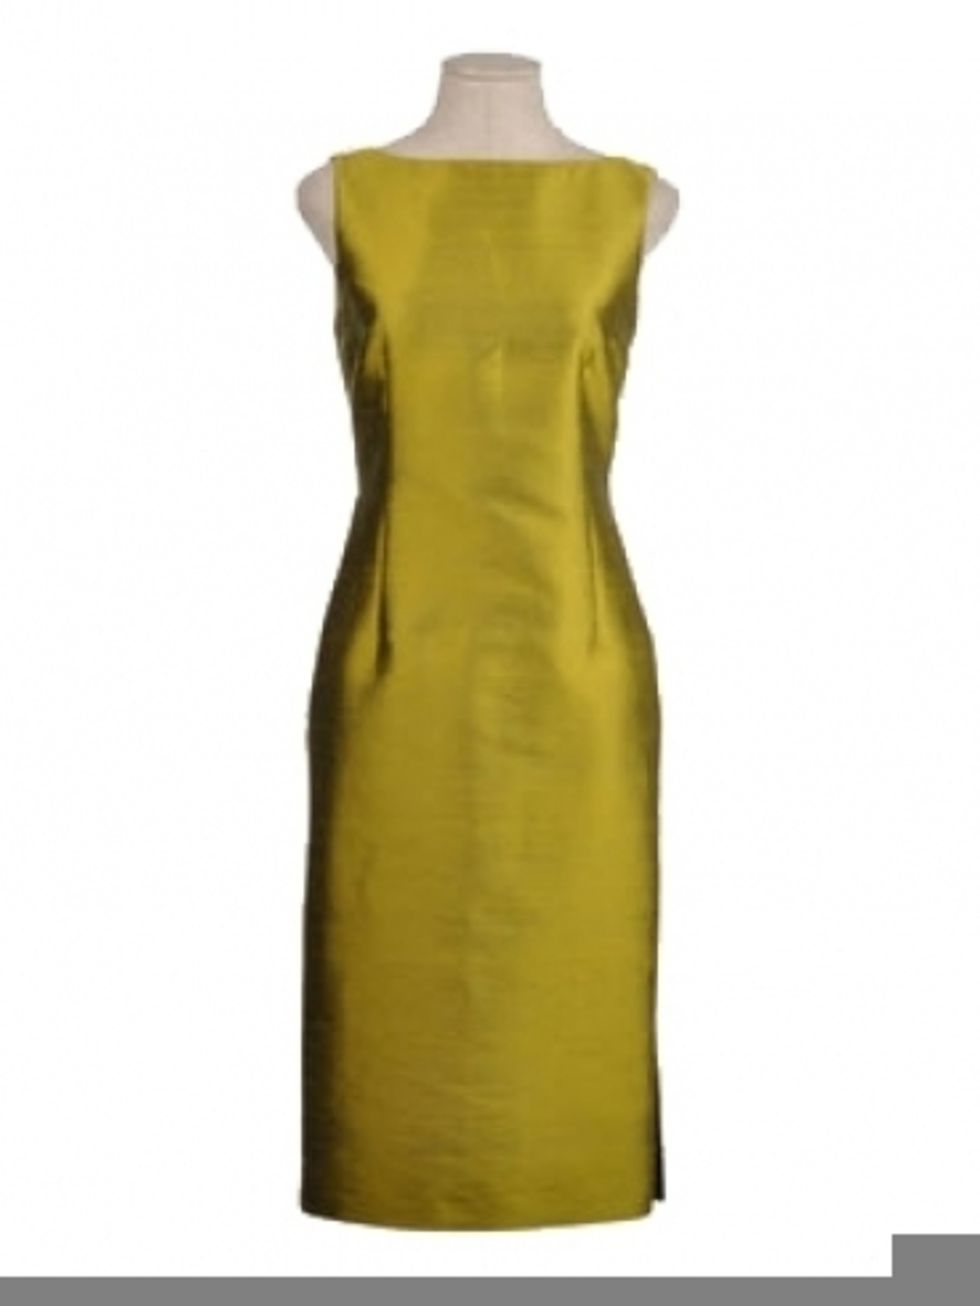 Yellow, Dress, Textile, One-piece garment, Pattern, Formal wear, Day dress, Fashion, Neck, Teal, 